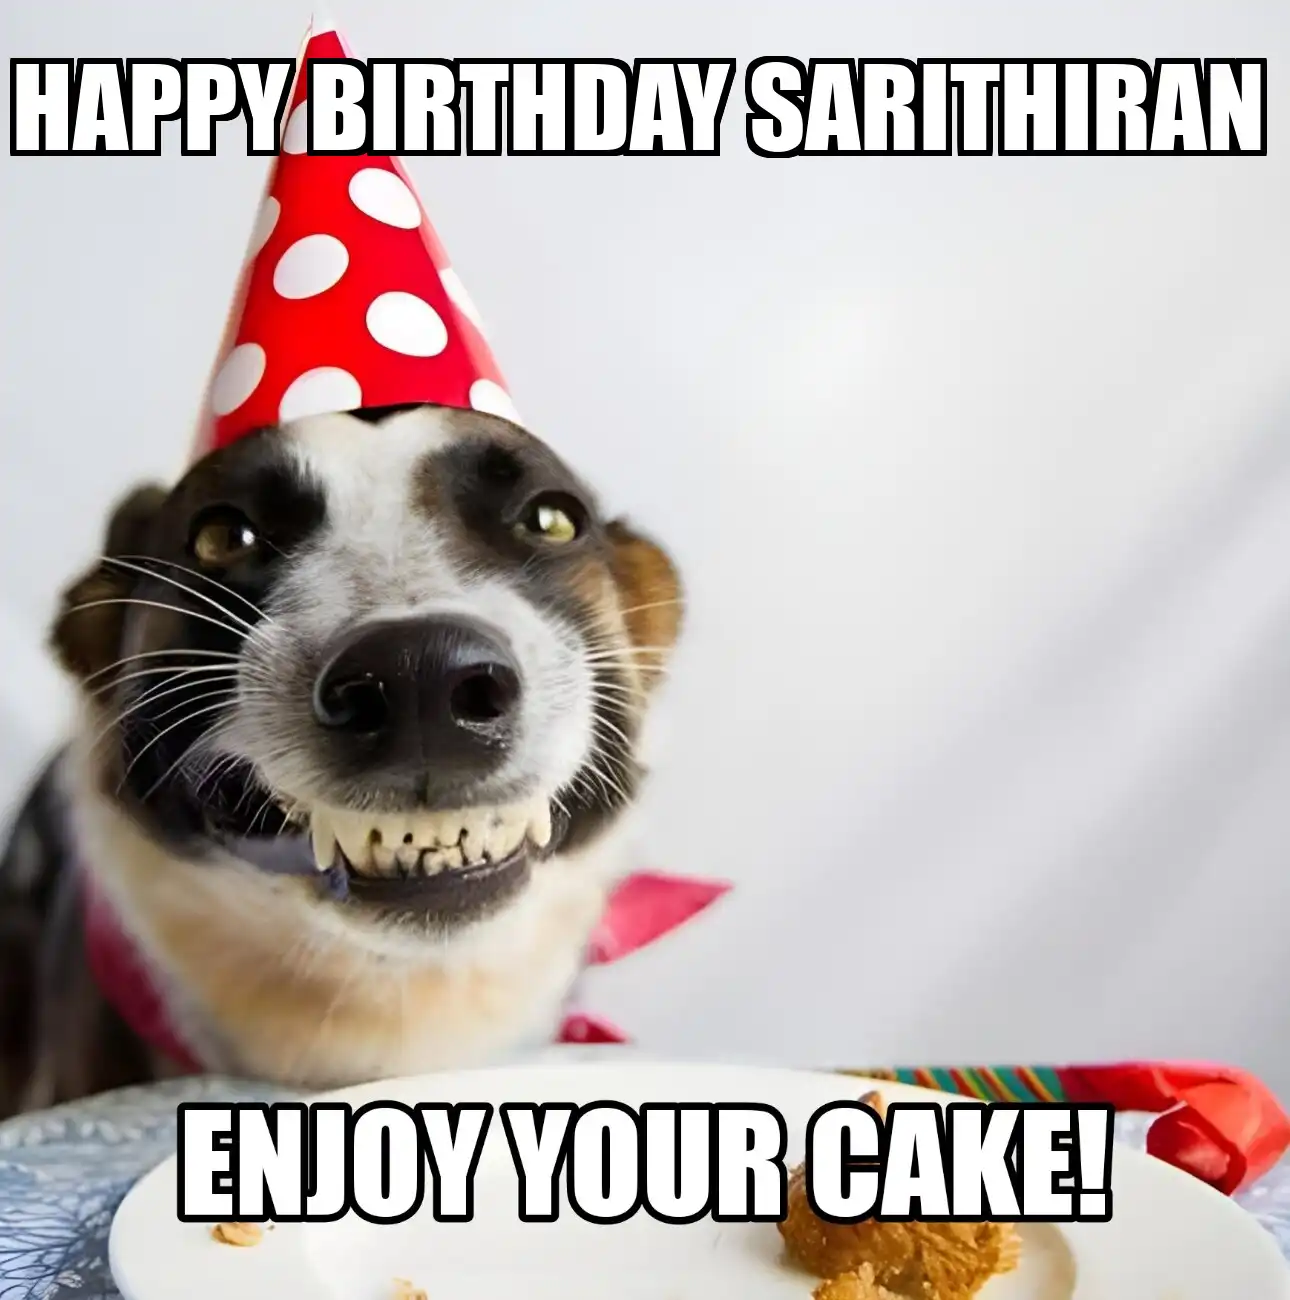 Happy Birthday Sarithiran Enjoy Your Cake Dog Meme